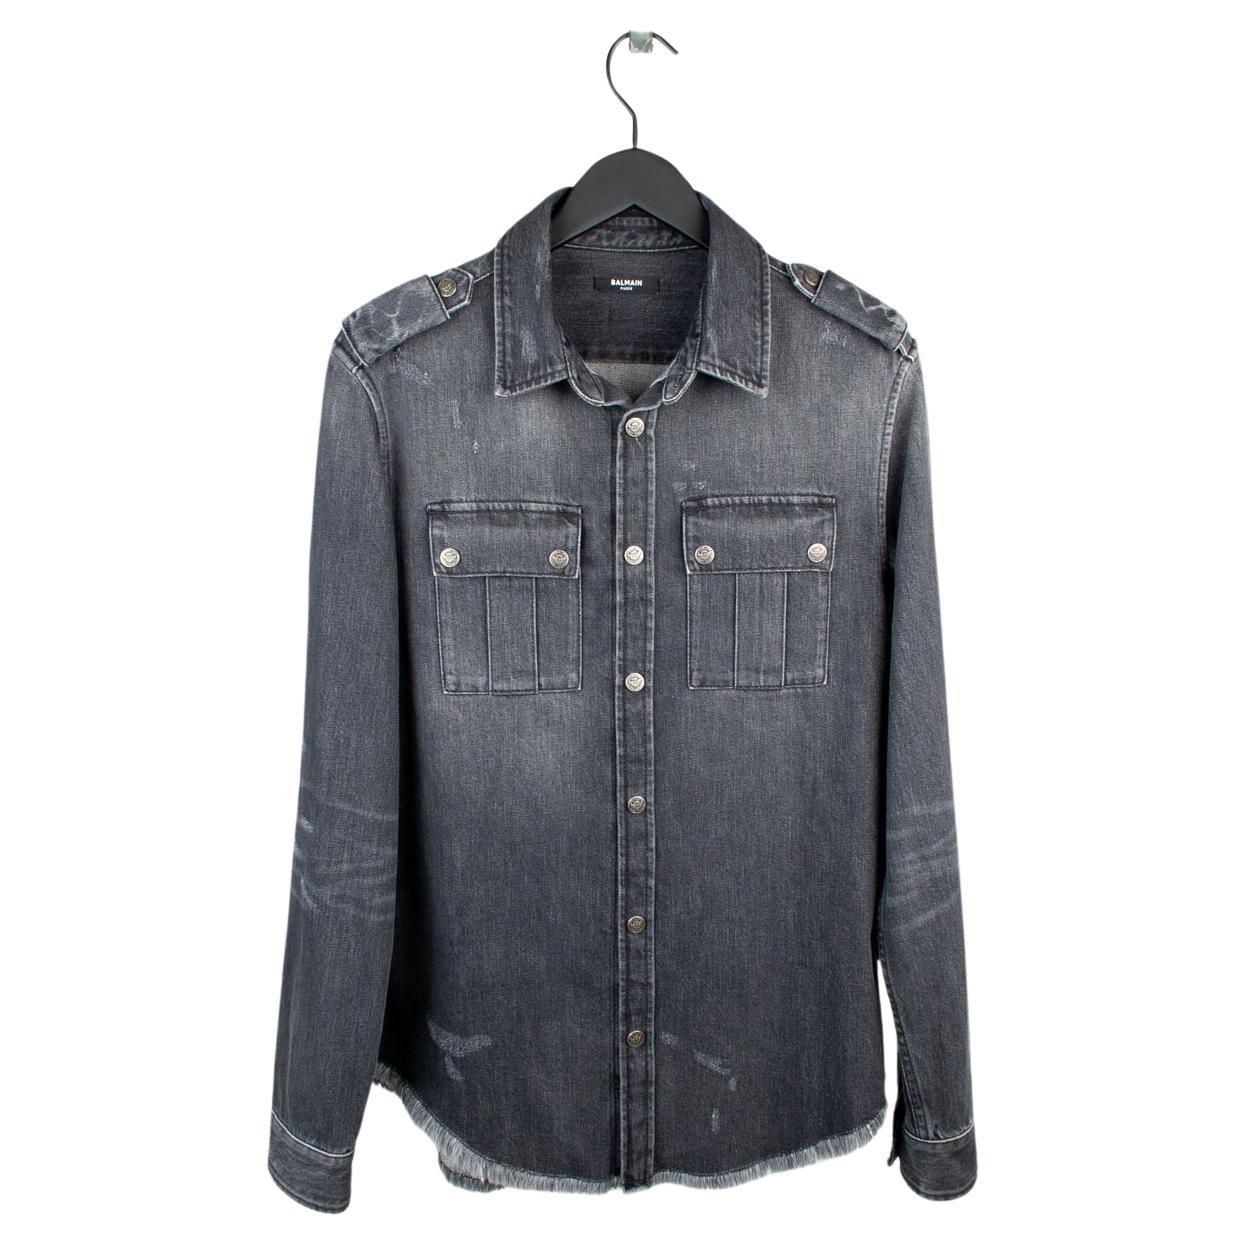 Balmain Paris Distressed Denim Over Shirt Men Jacket Size 40 (Medium) S603 For Sale